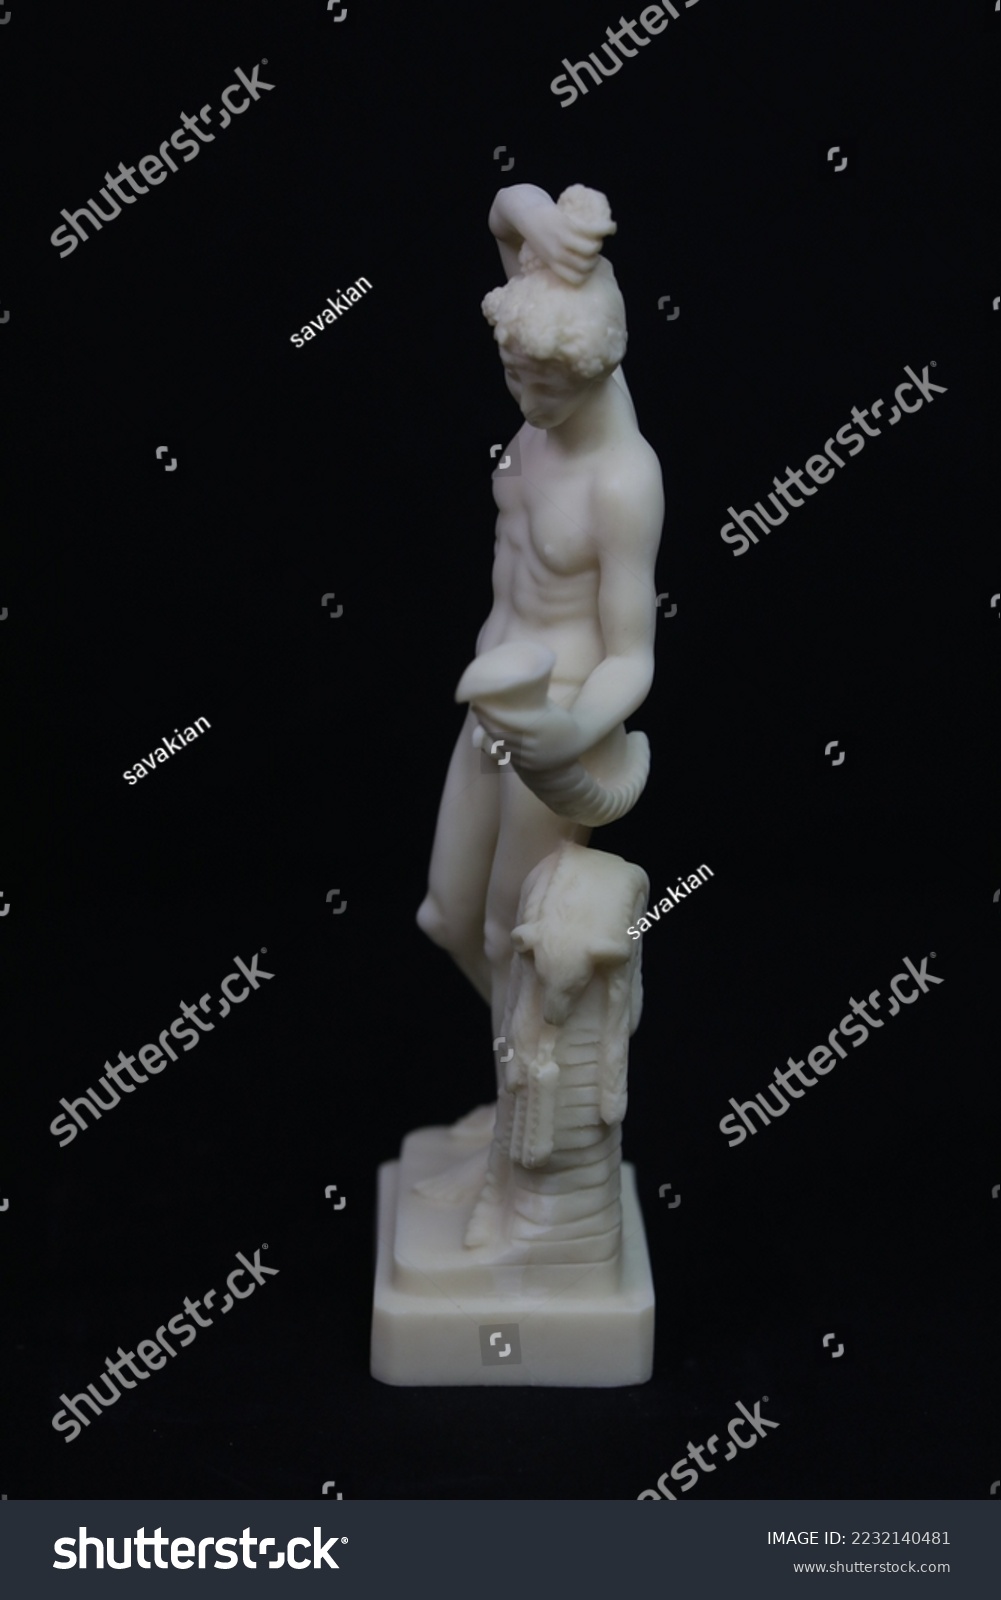 Different figure representation portraying a Greek shepherd, Jesus Christ as well as Sappho #2232140481